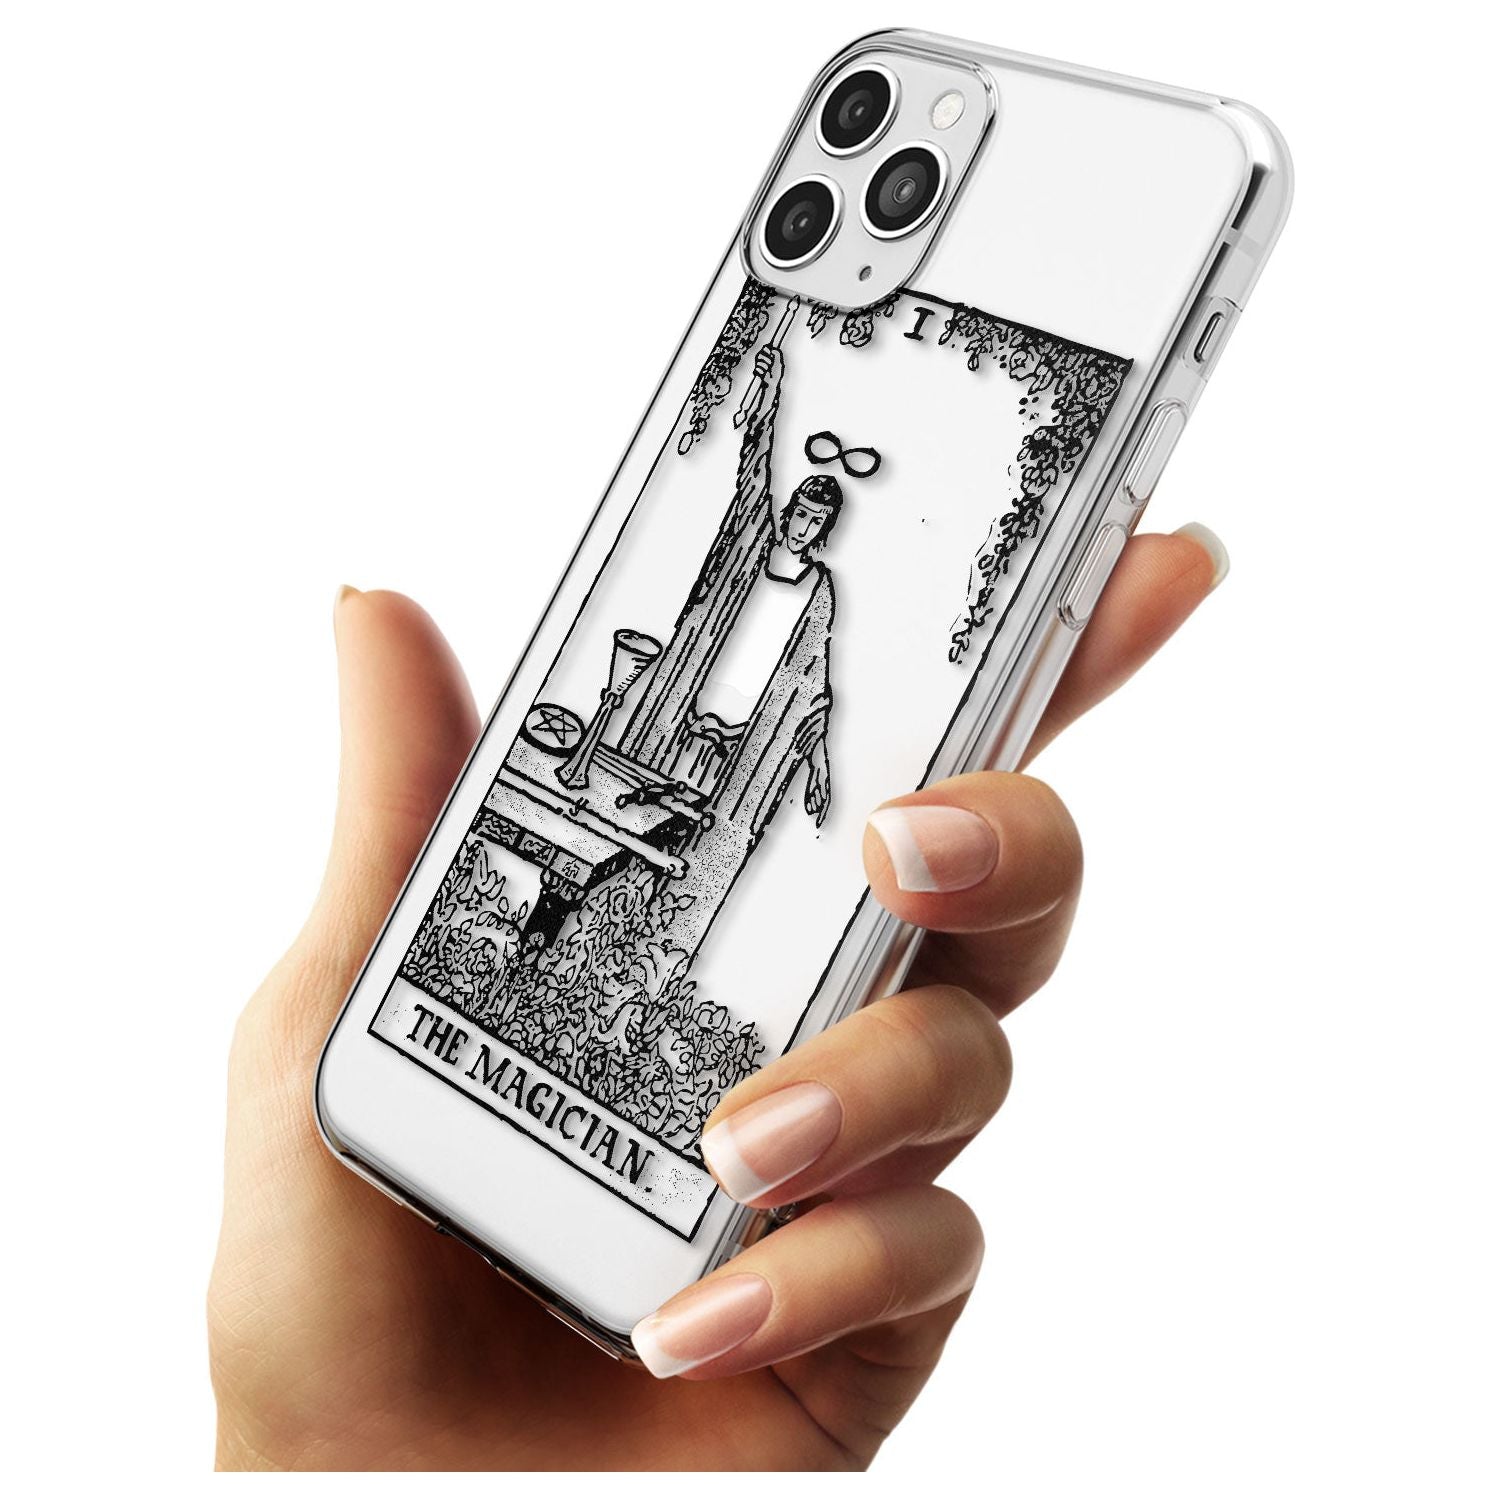 The Magician Tarot Card - Transparent Black Impact Phone Case for iPhone 11 Pro Max